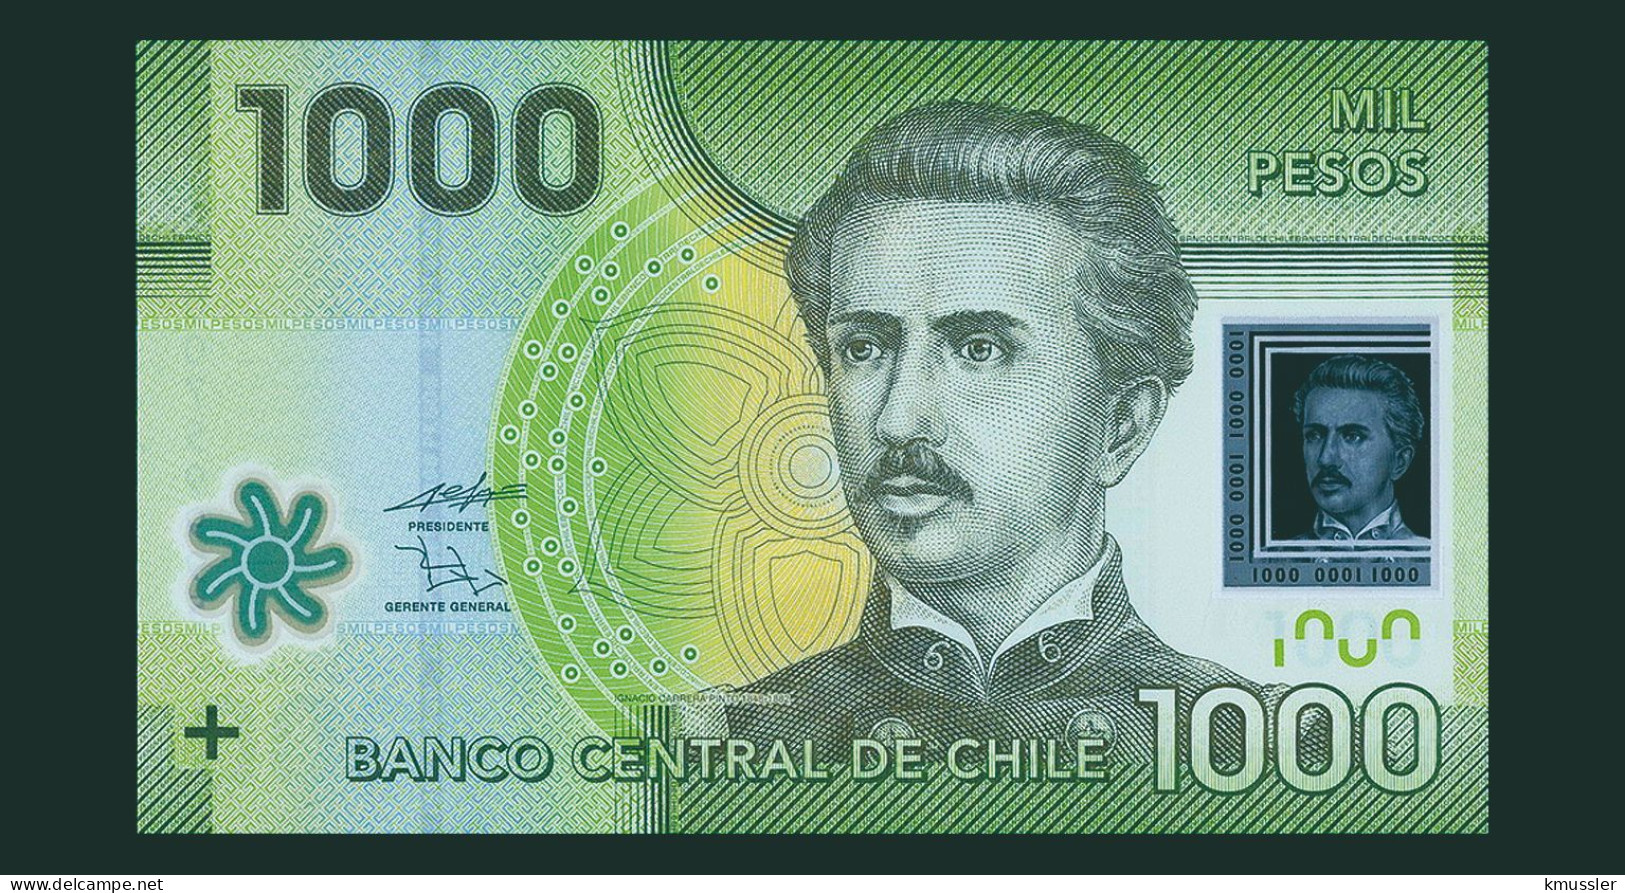 # # # Banknote Aus Chile 1.000 Pesos 2011 (P-161) UNC # # # - Chile